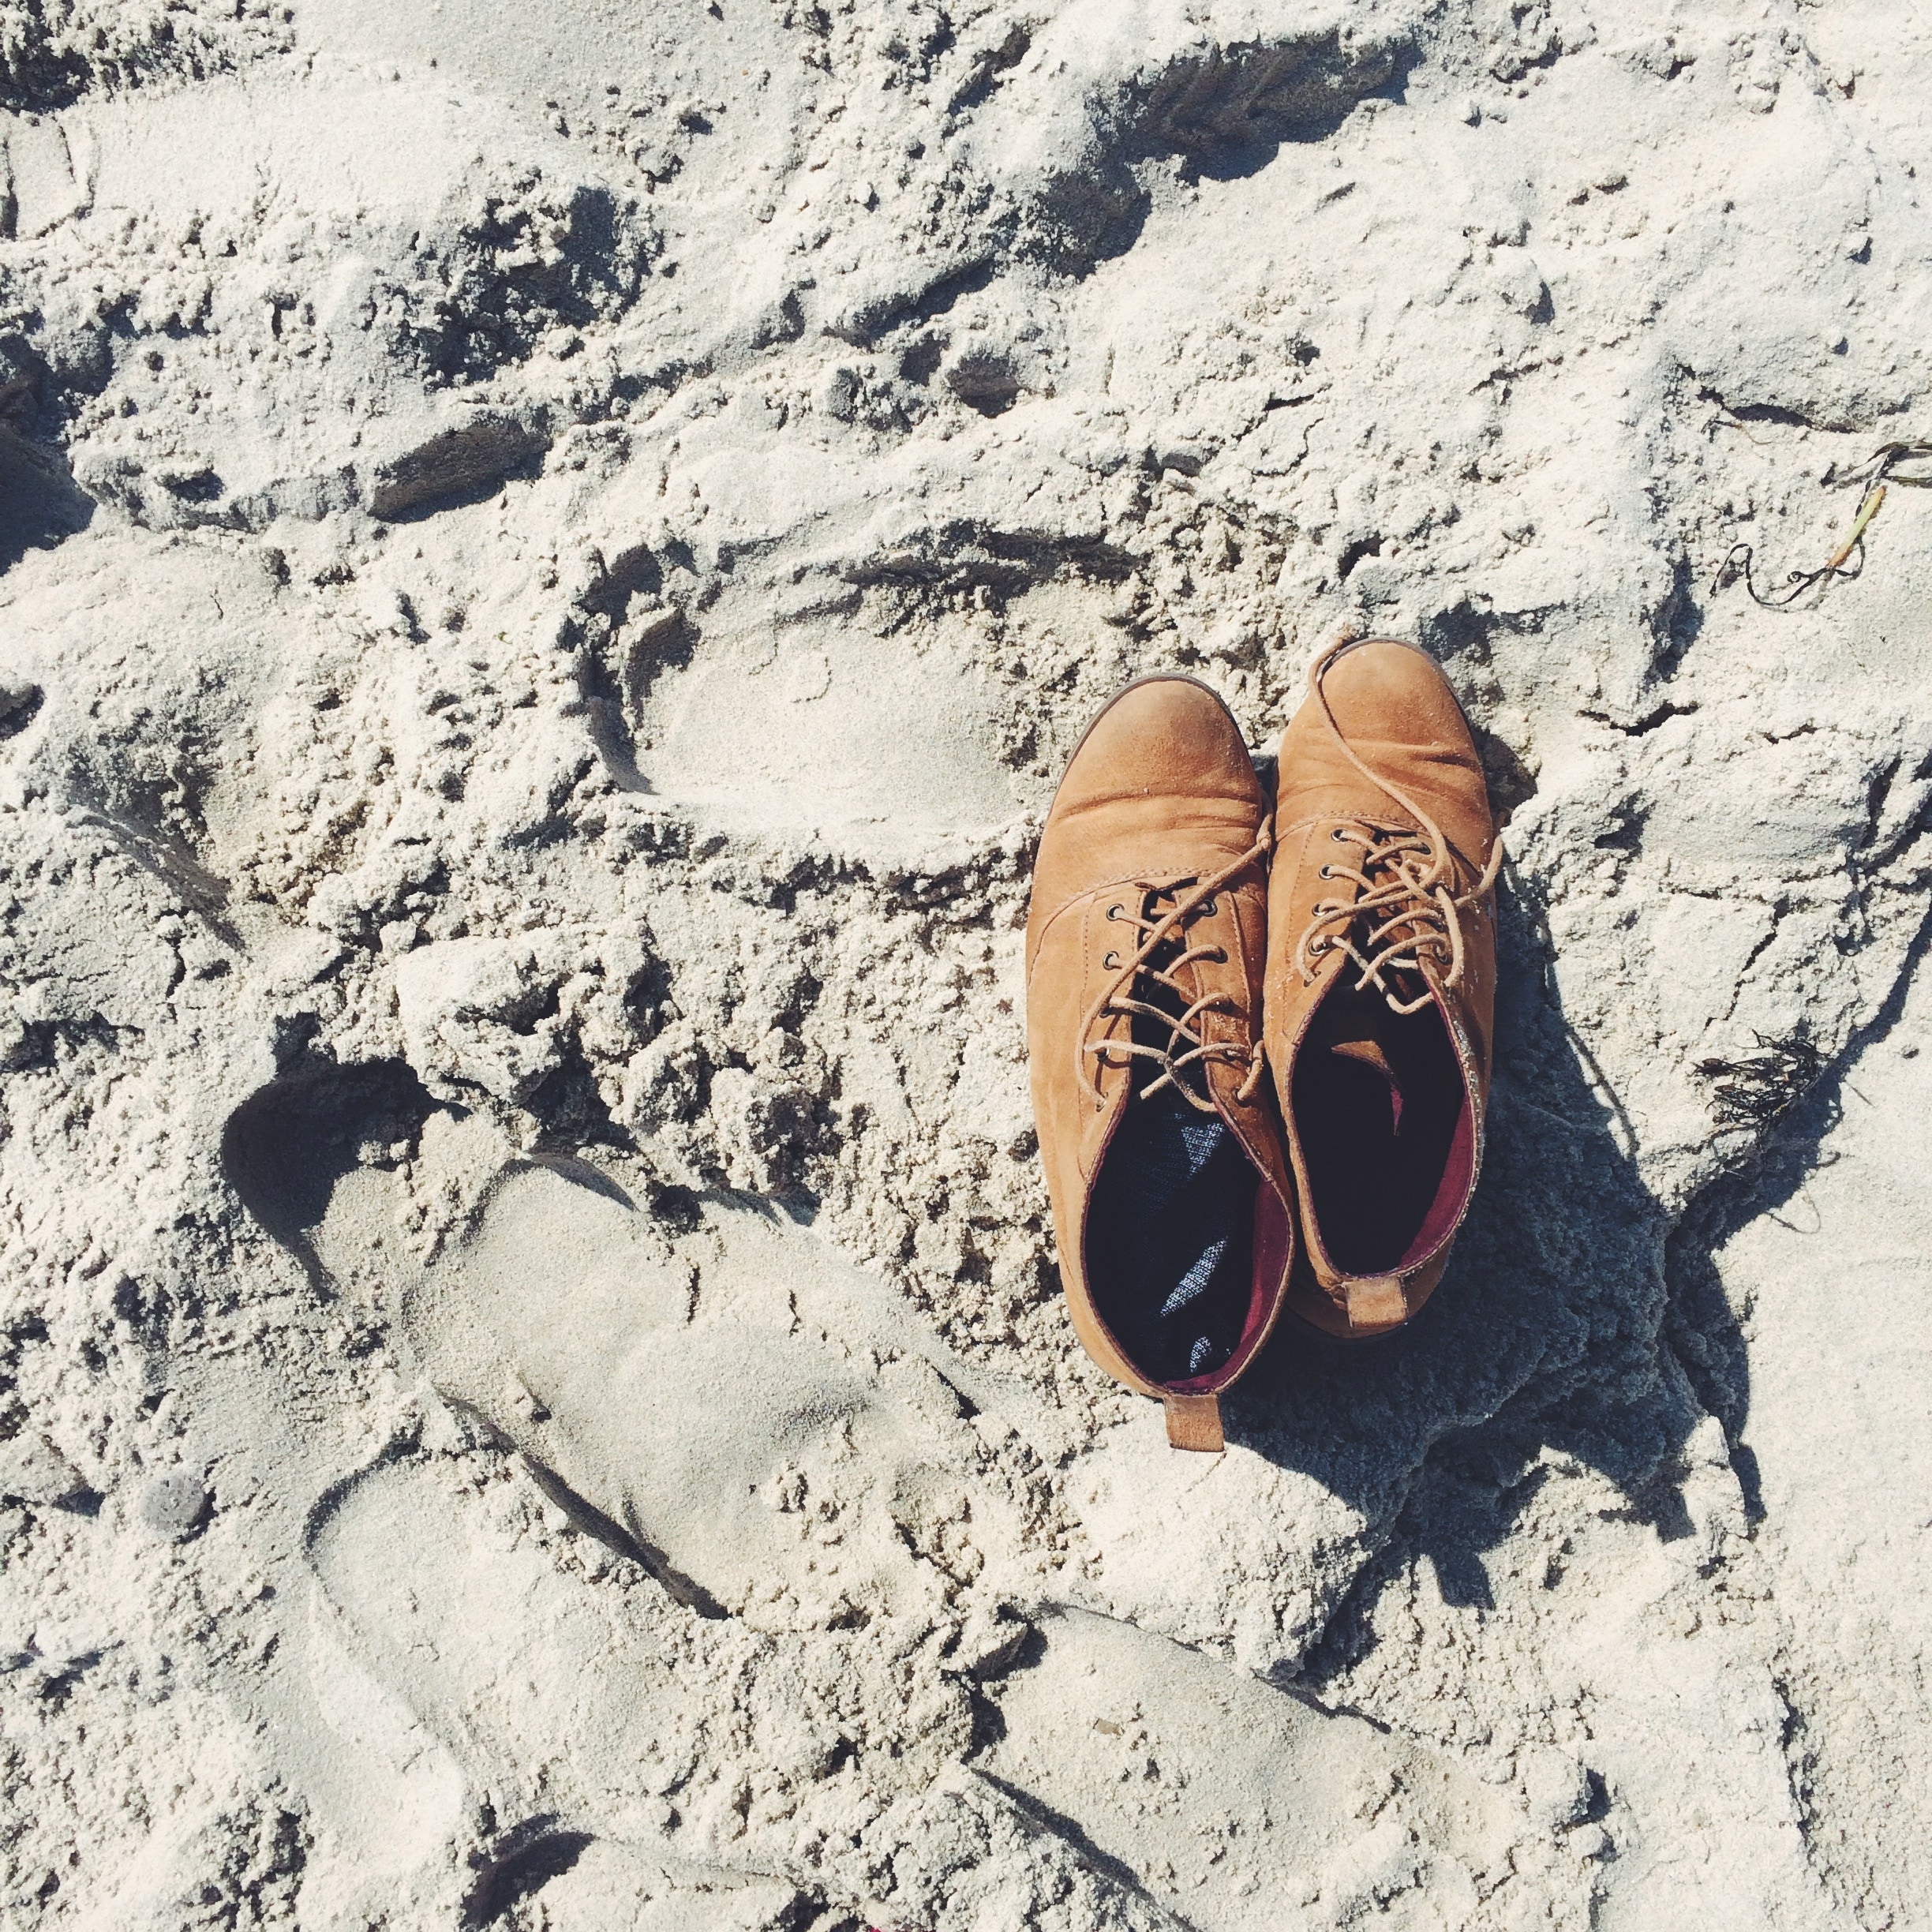 Sand, Beach, Shoes, Bathroom, Boots, sunglasses, sand